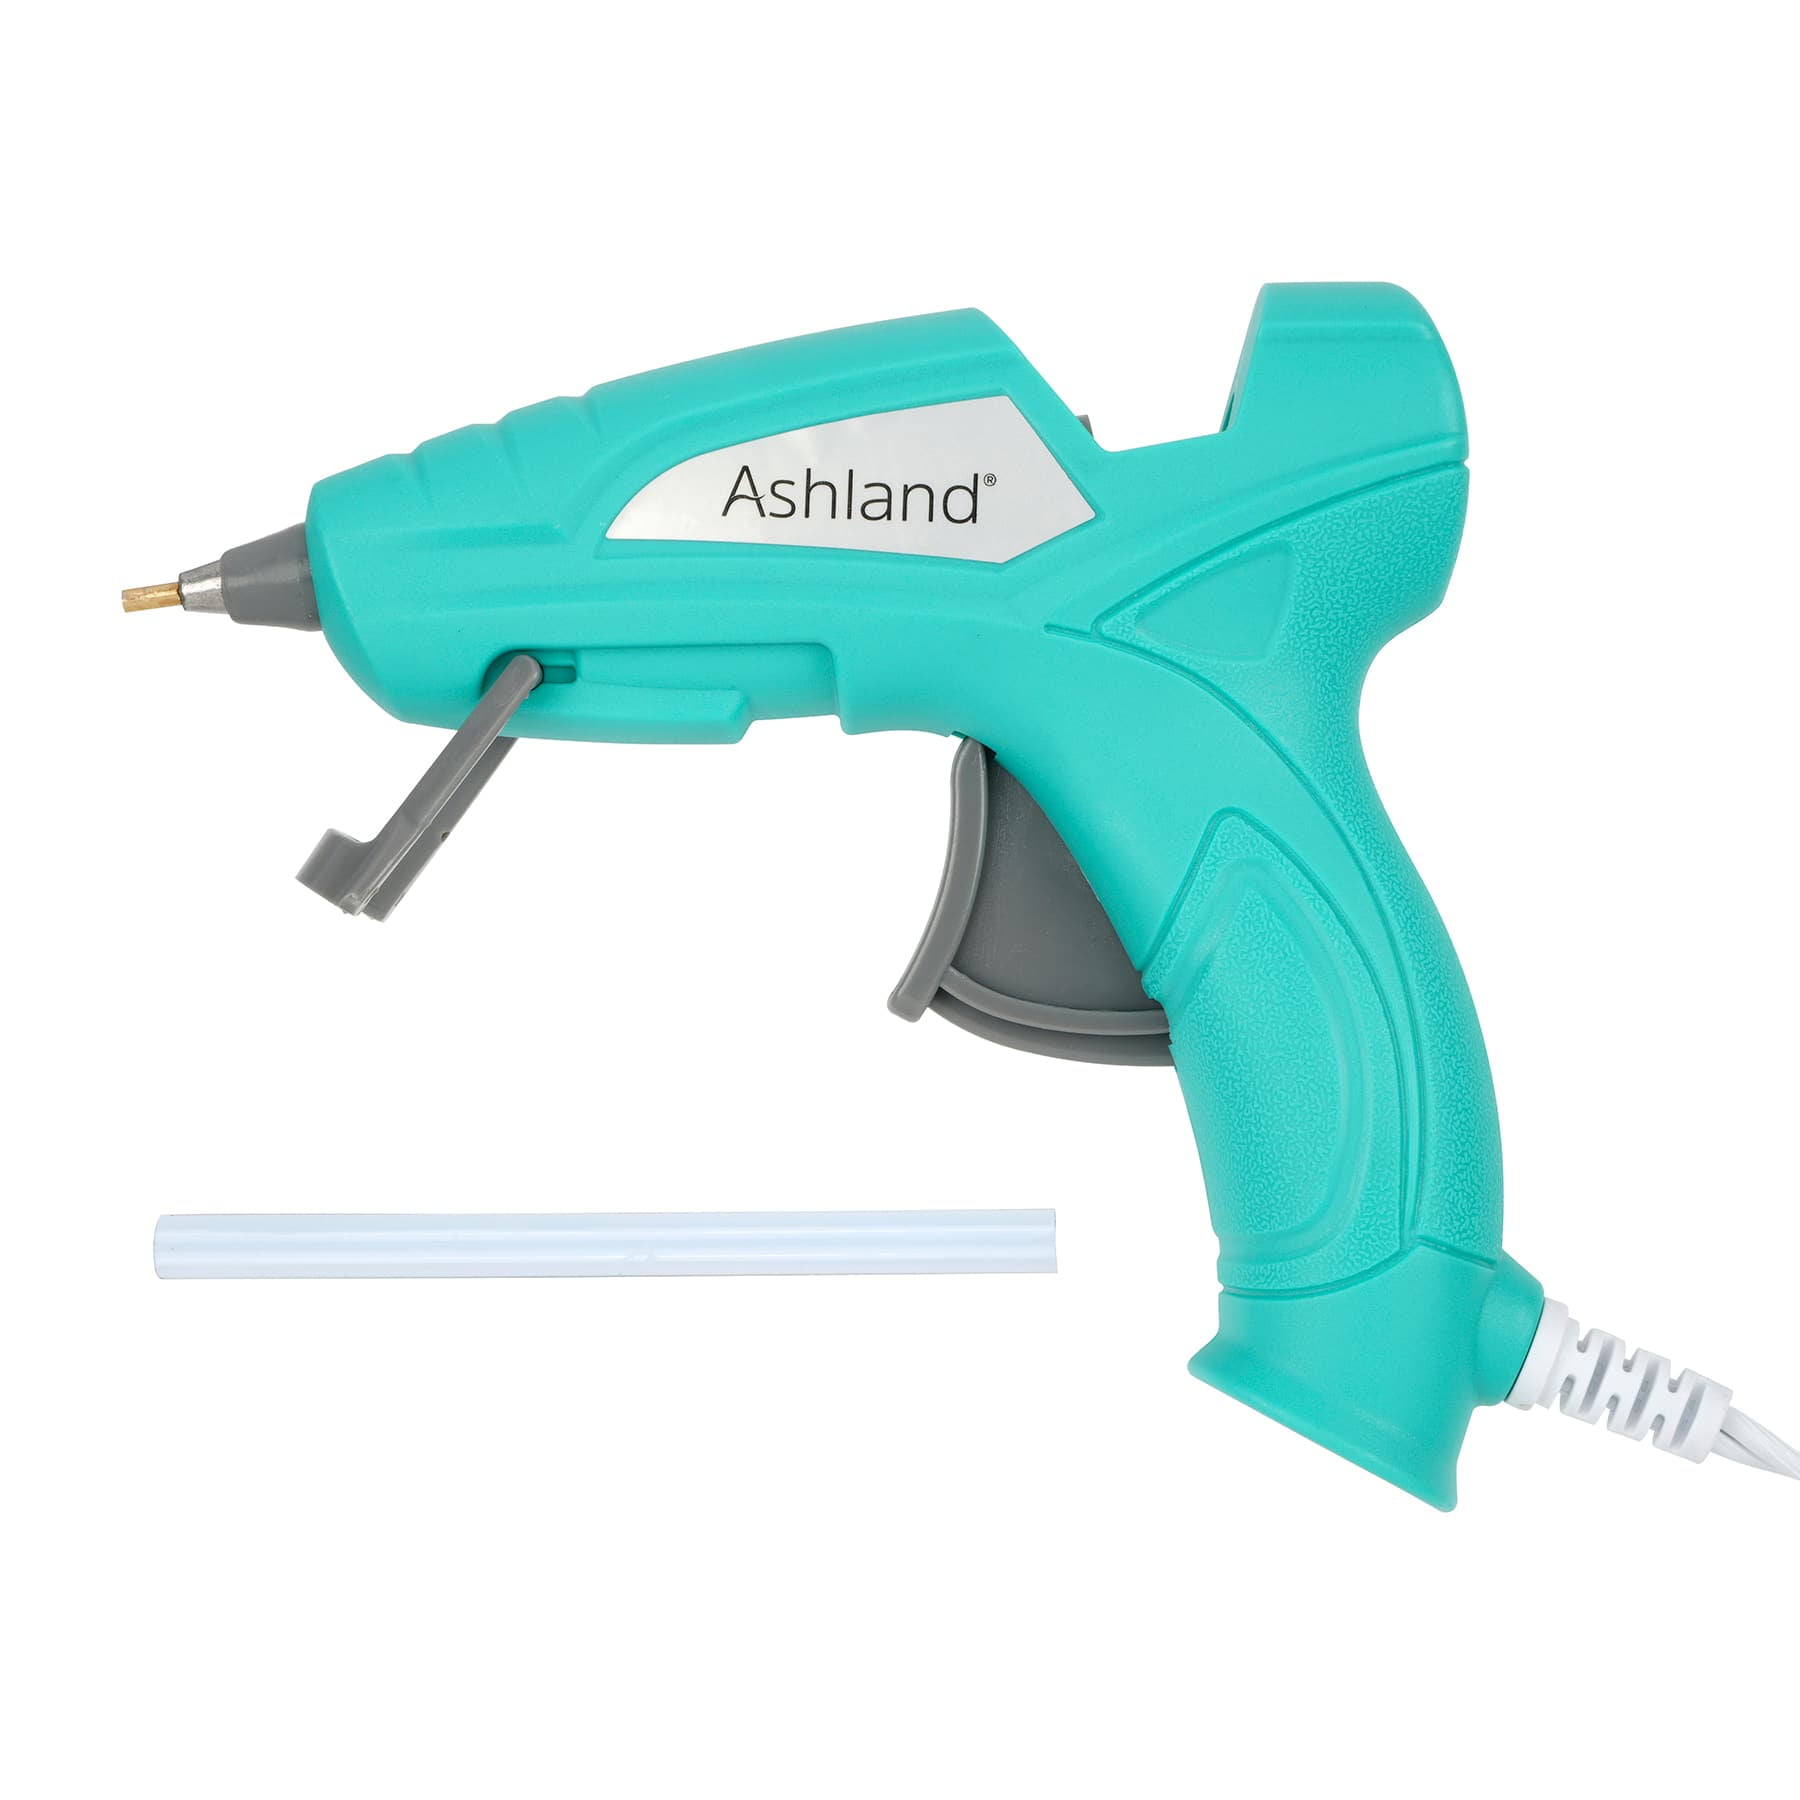 Mini Low Temperature Glue Gun by Ashland®